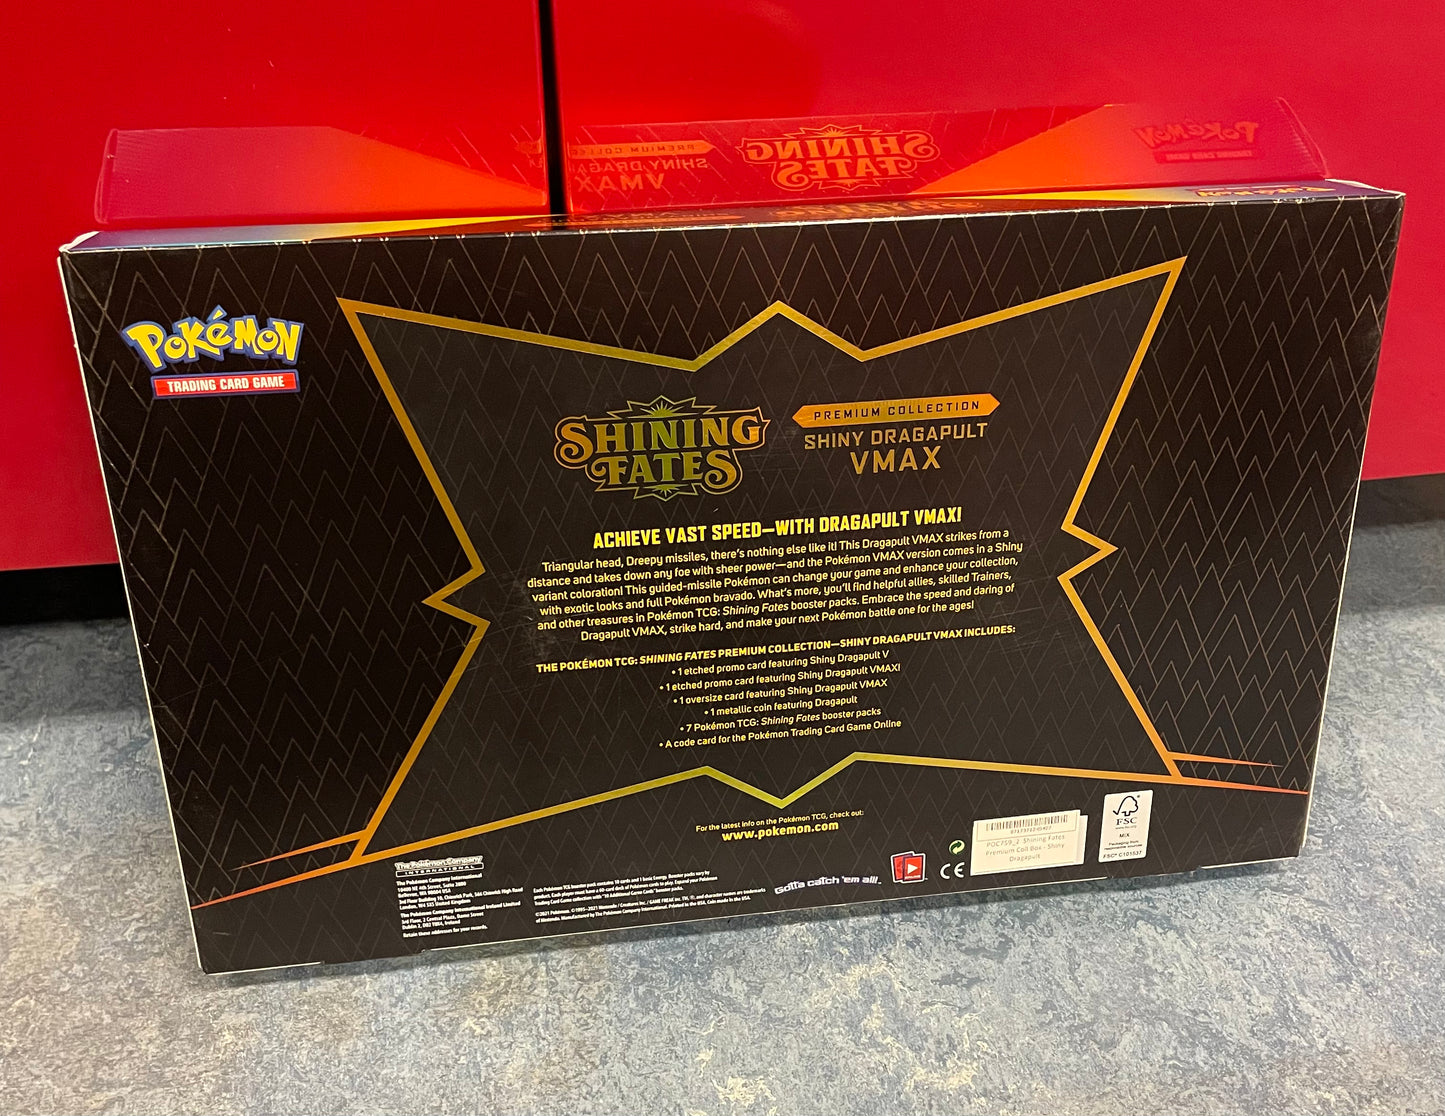 Pokémon Shining Fates Premium Collection Box - Shiny Dragapult